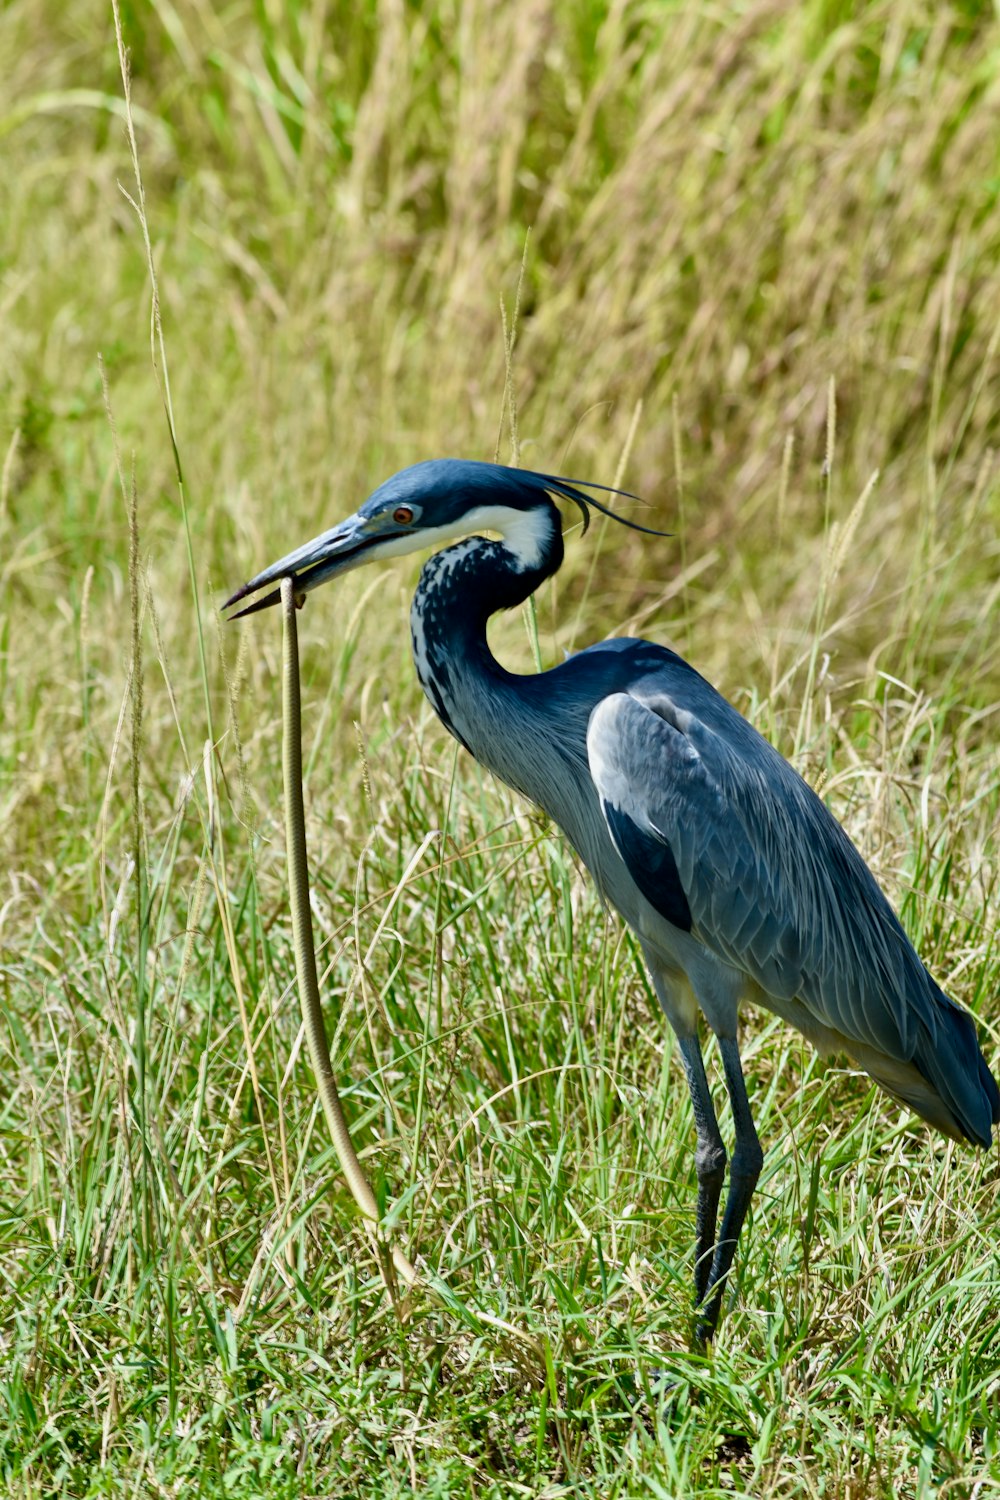 a bird with a long beak standing in the grass